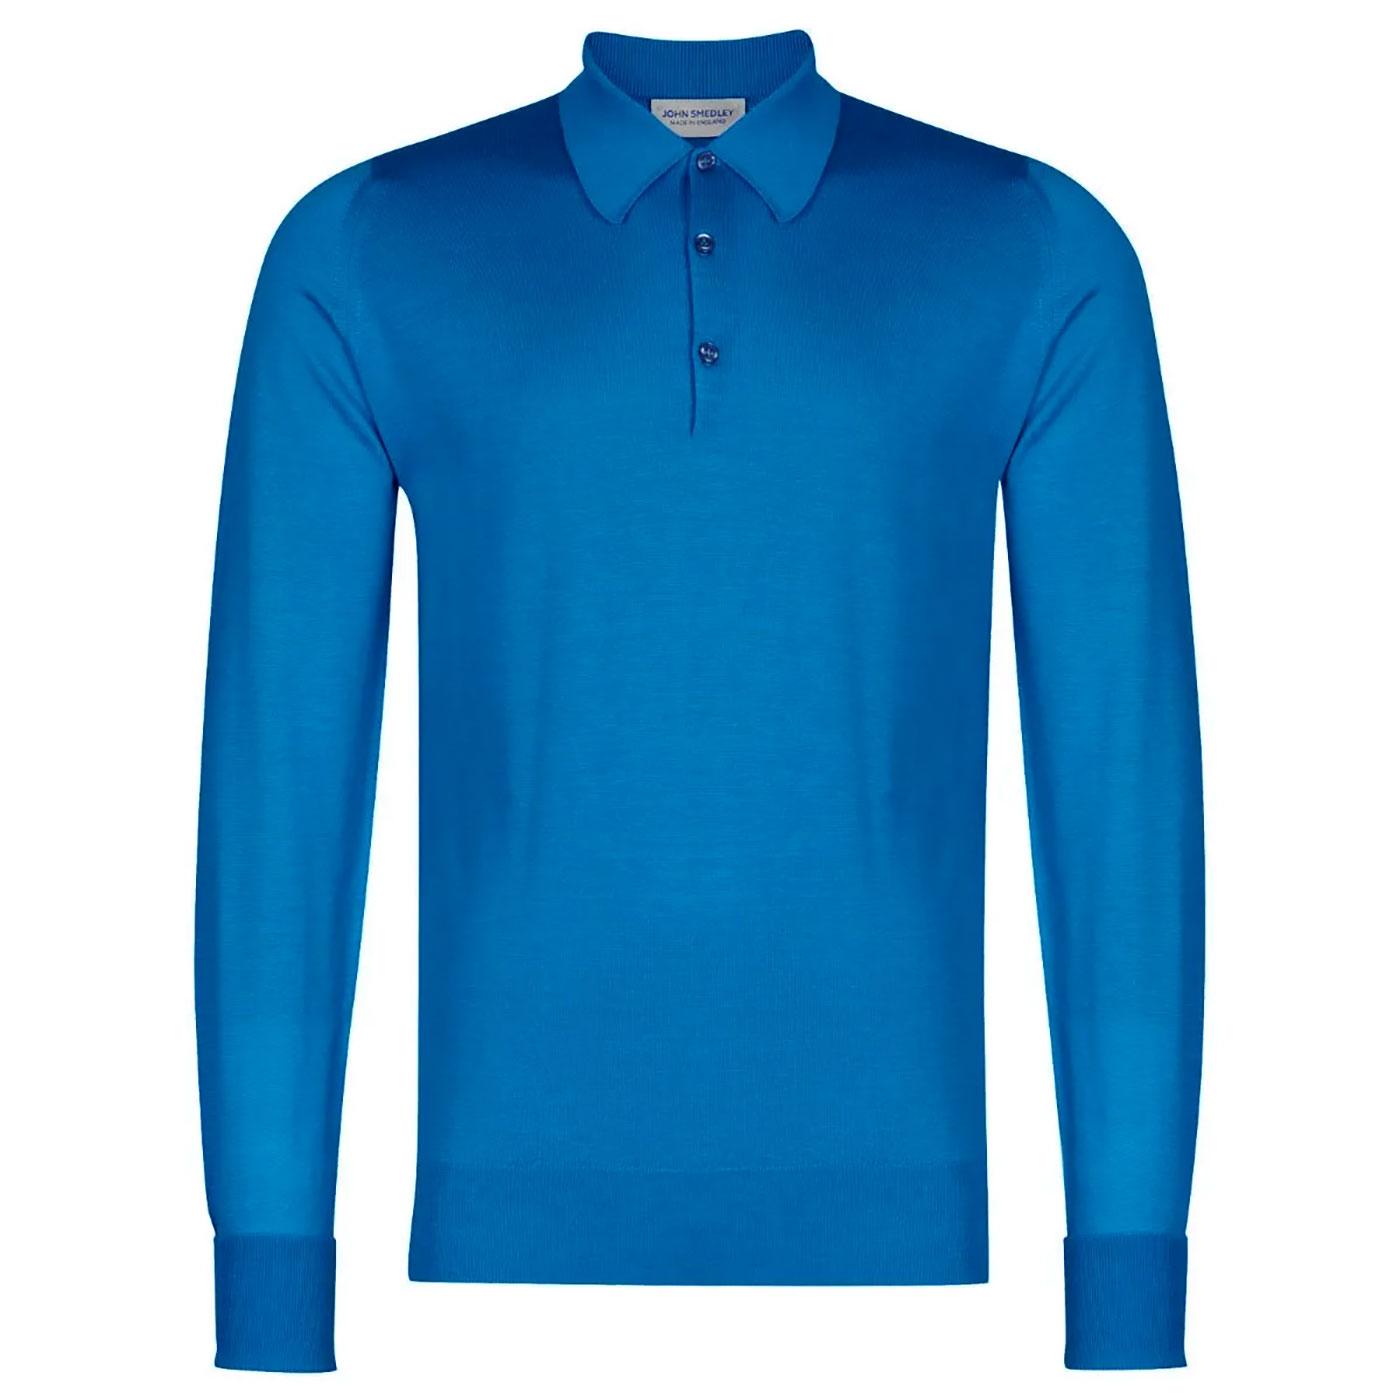 Dorset JOHN SMEDLEY Merino Wool Mod Polo Shirt LB